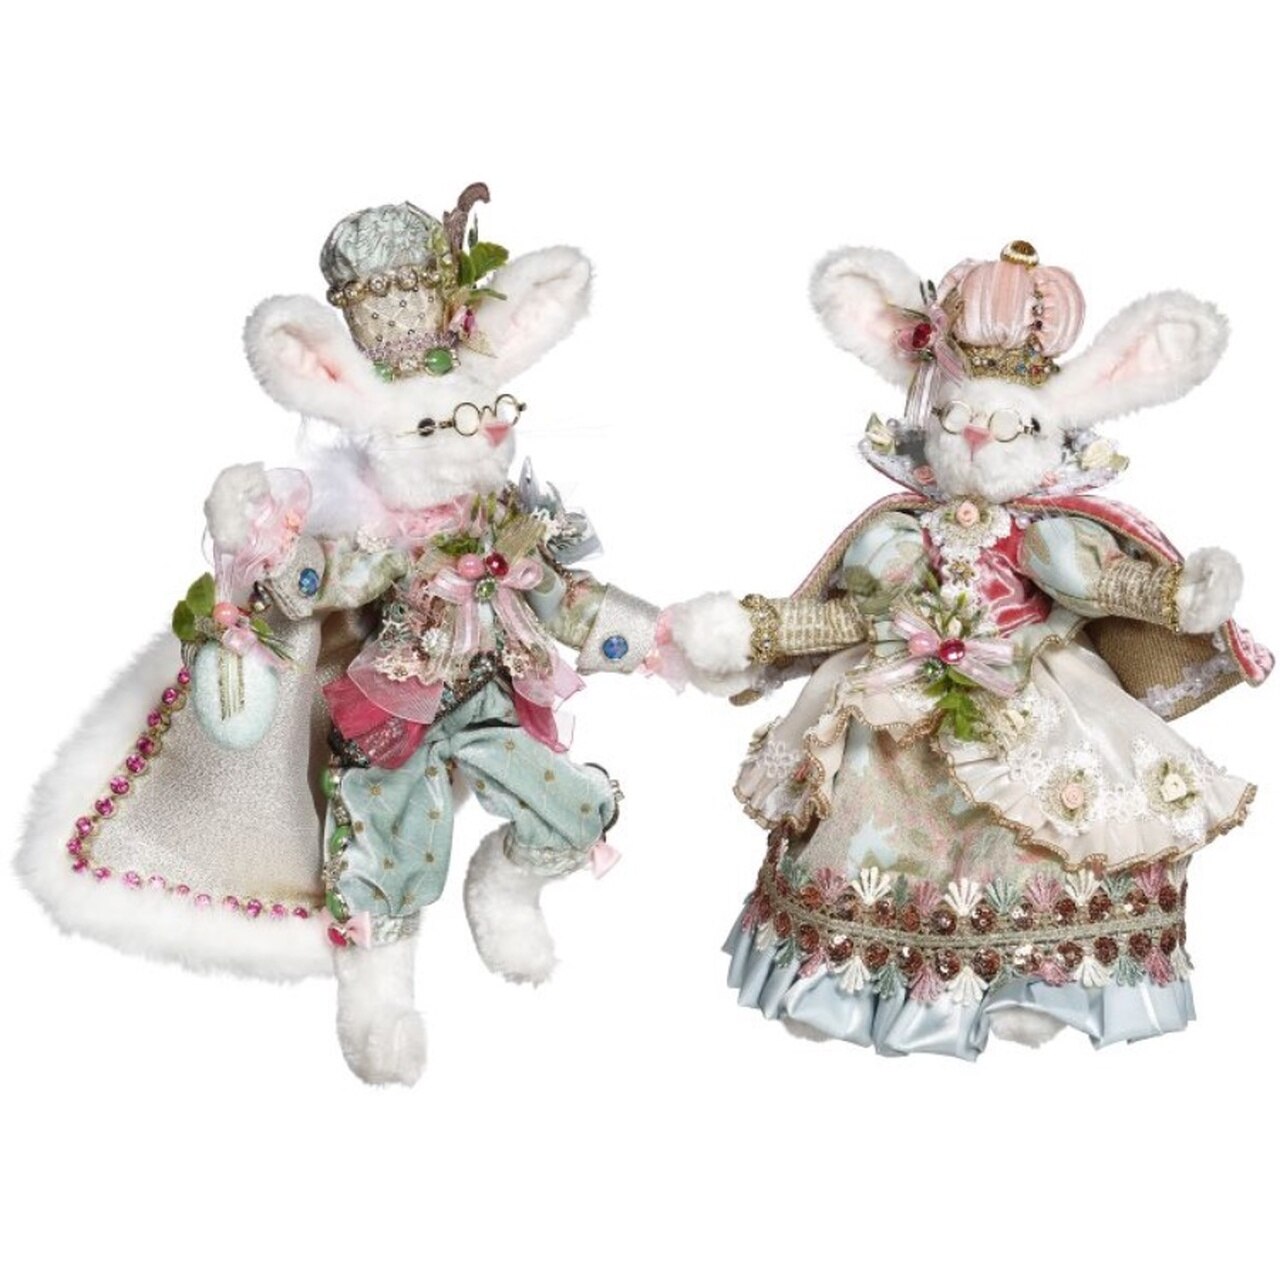 Mr & Mrs Royal Court Bunny (33cm)